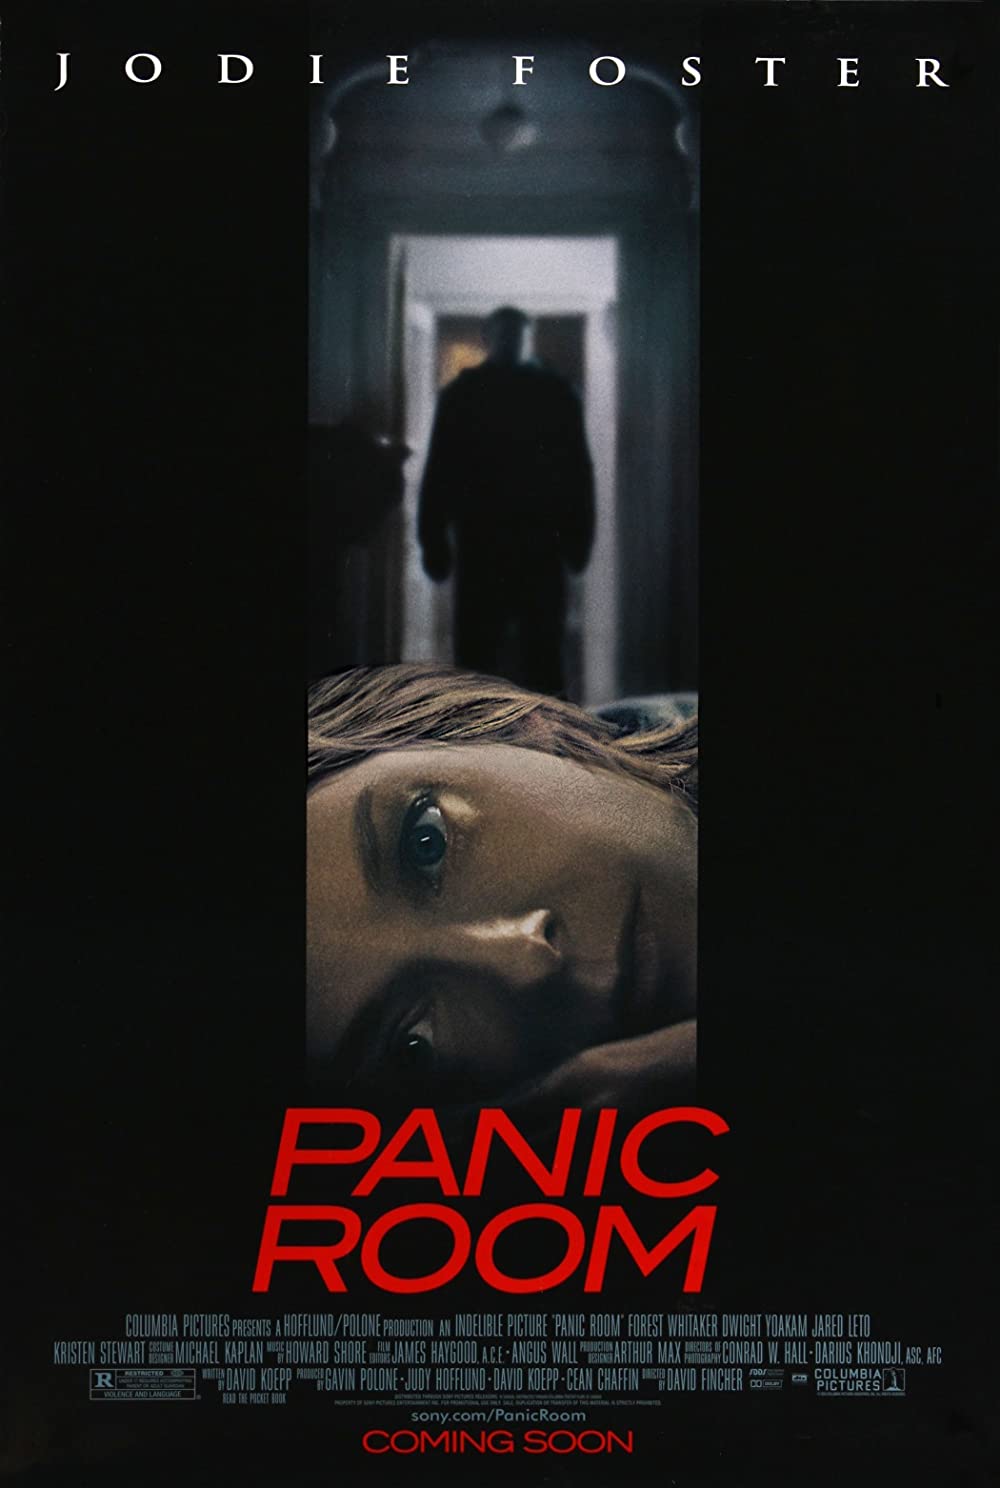 Filmbeschreibung zu Panic Room (OV)